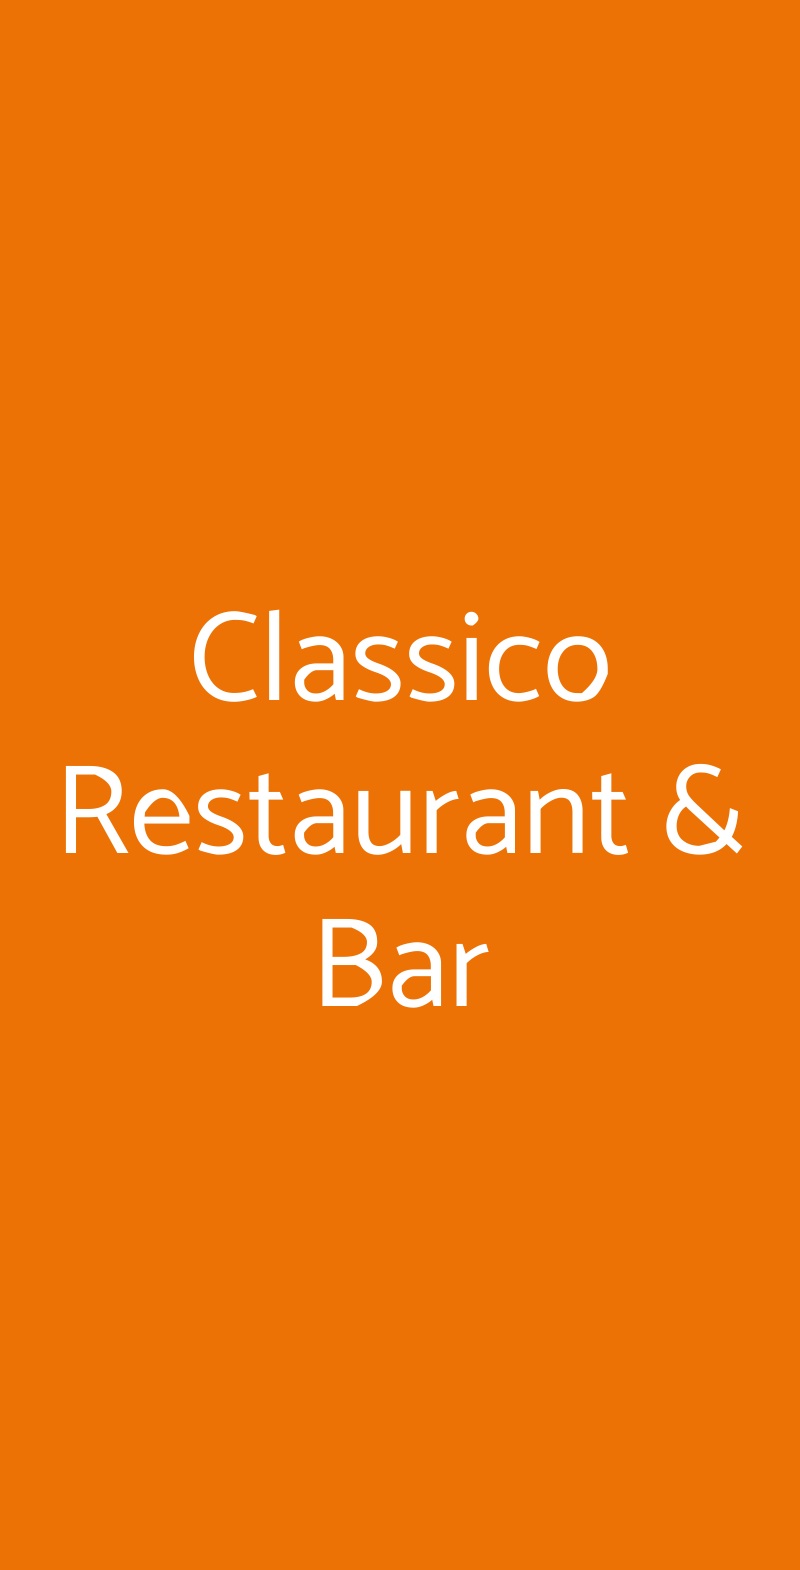 Classico Restaurant & Bar Milano menù 1 pagina